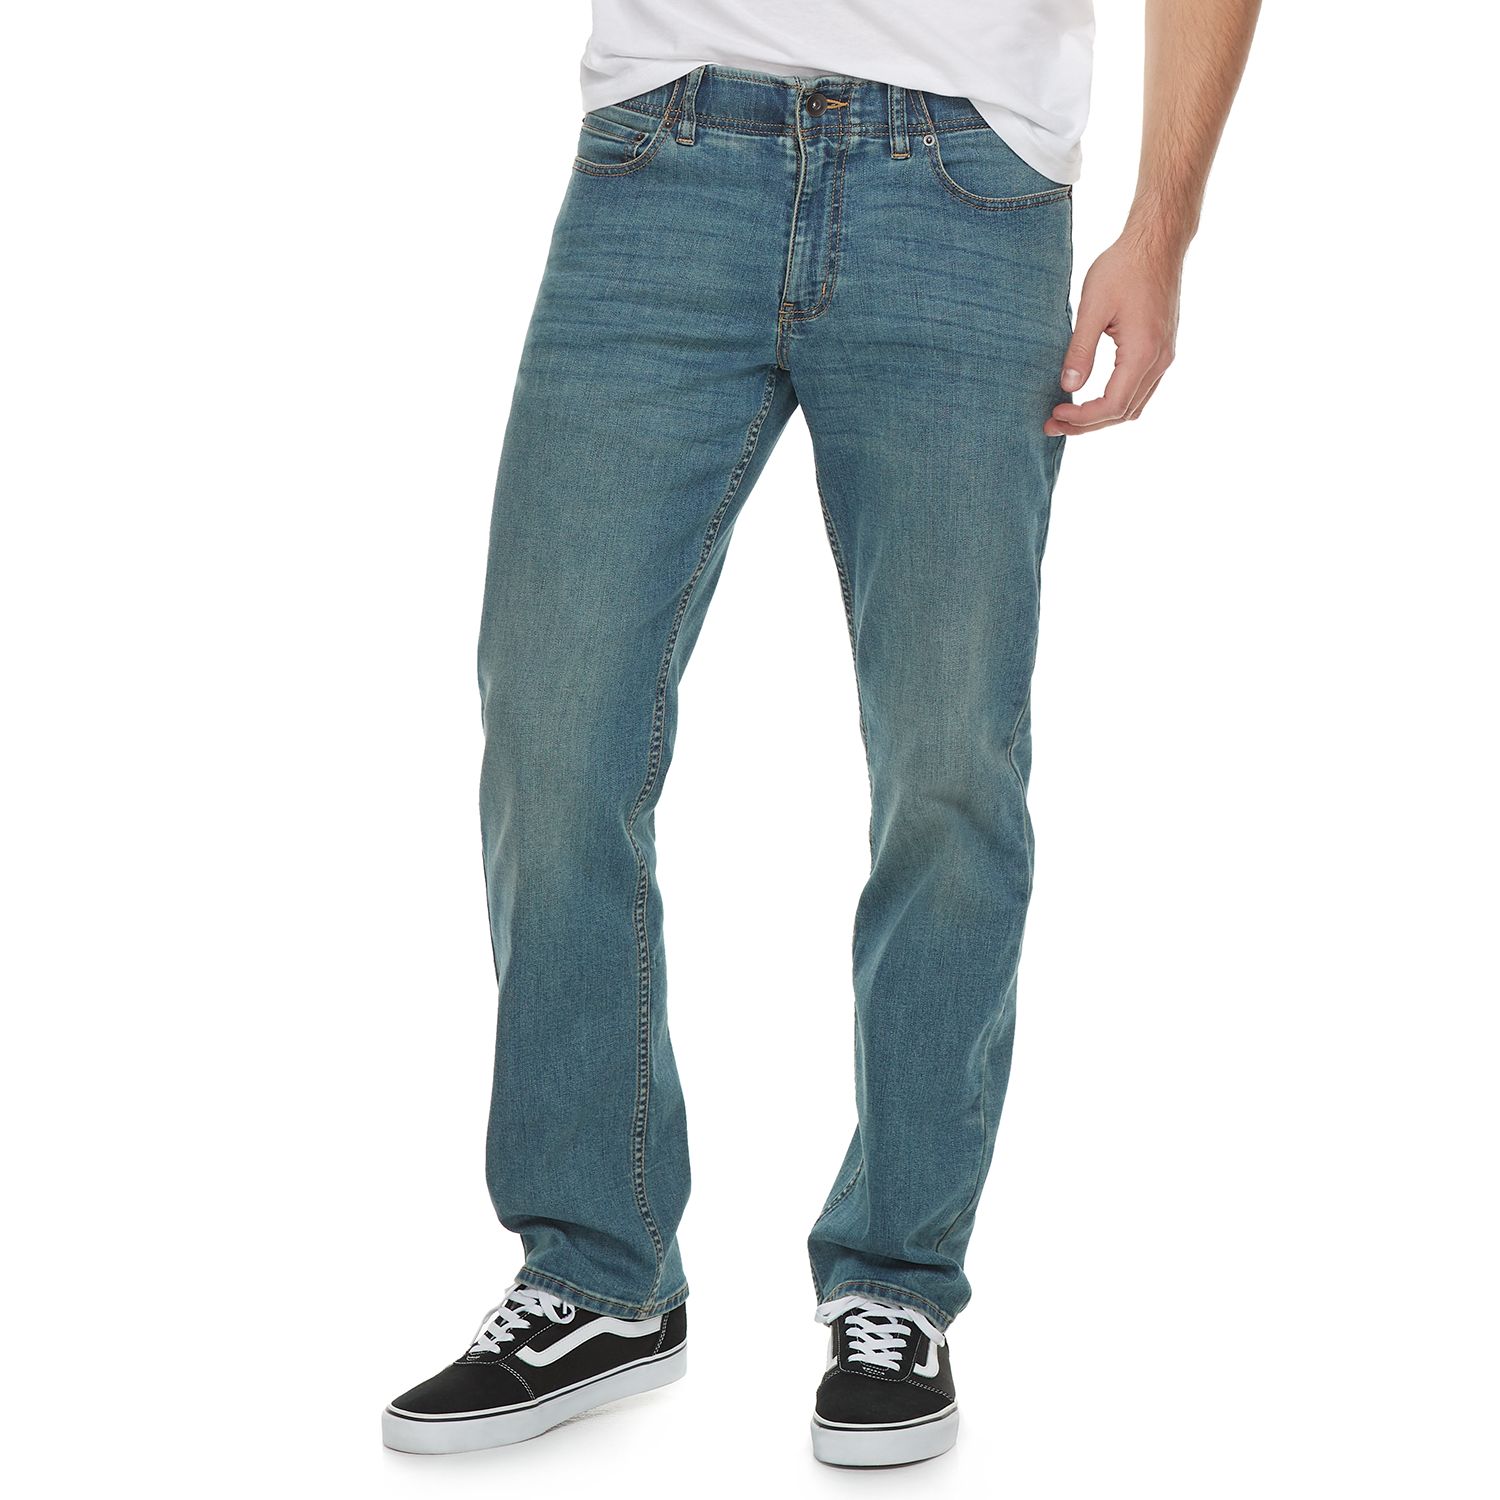 urban jeans kohls